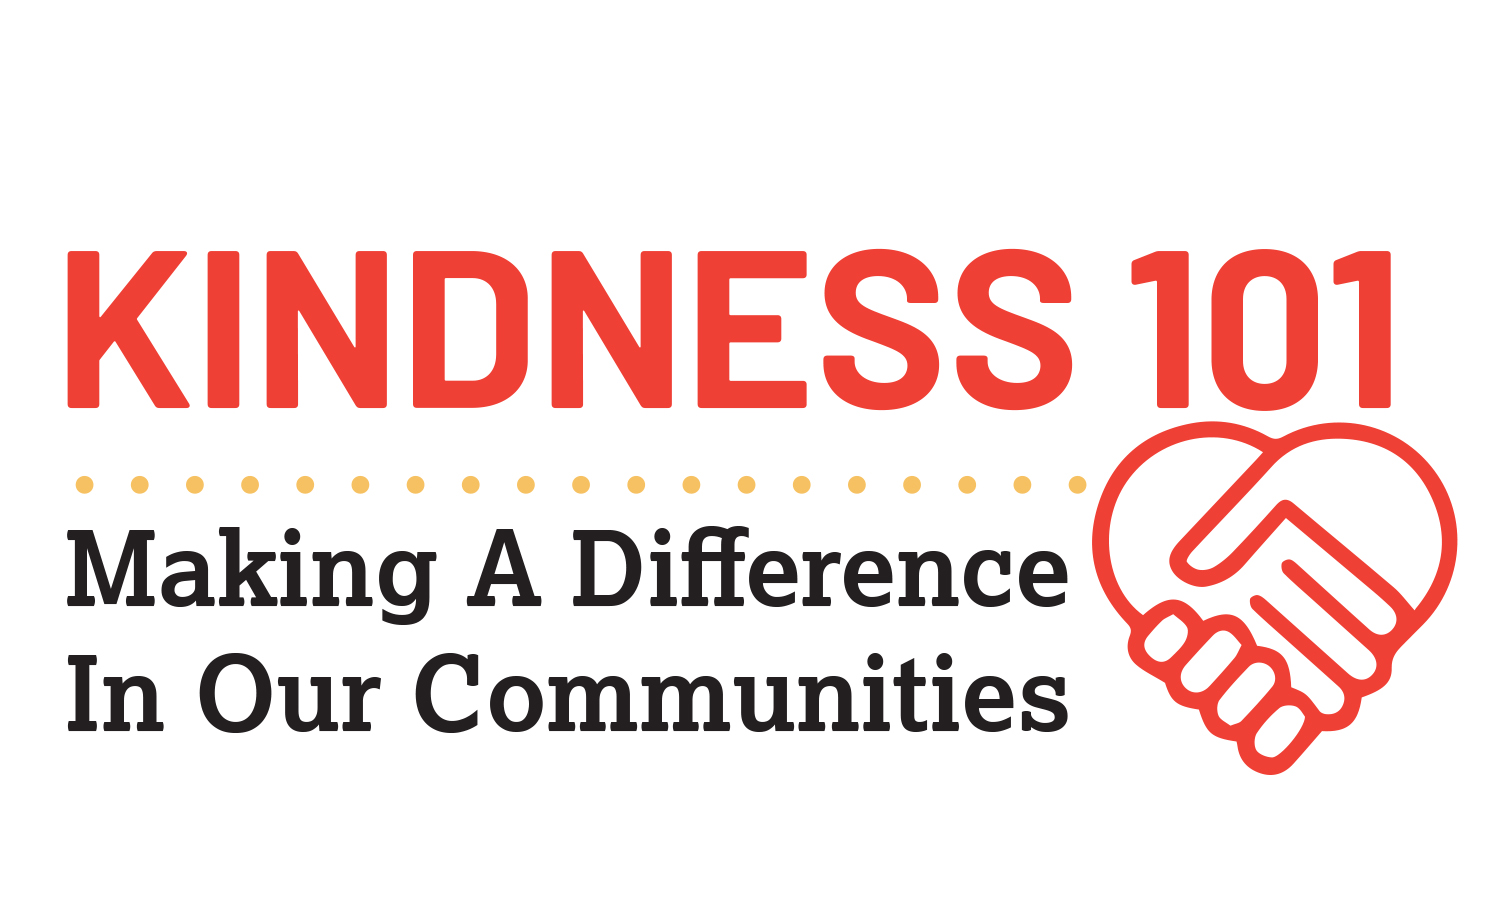 Kindness 101 Summer Volunteer Project